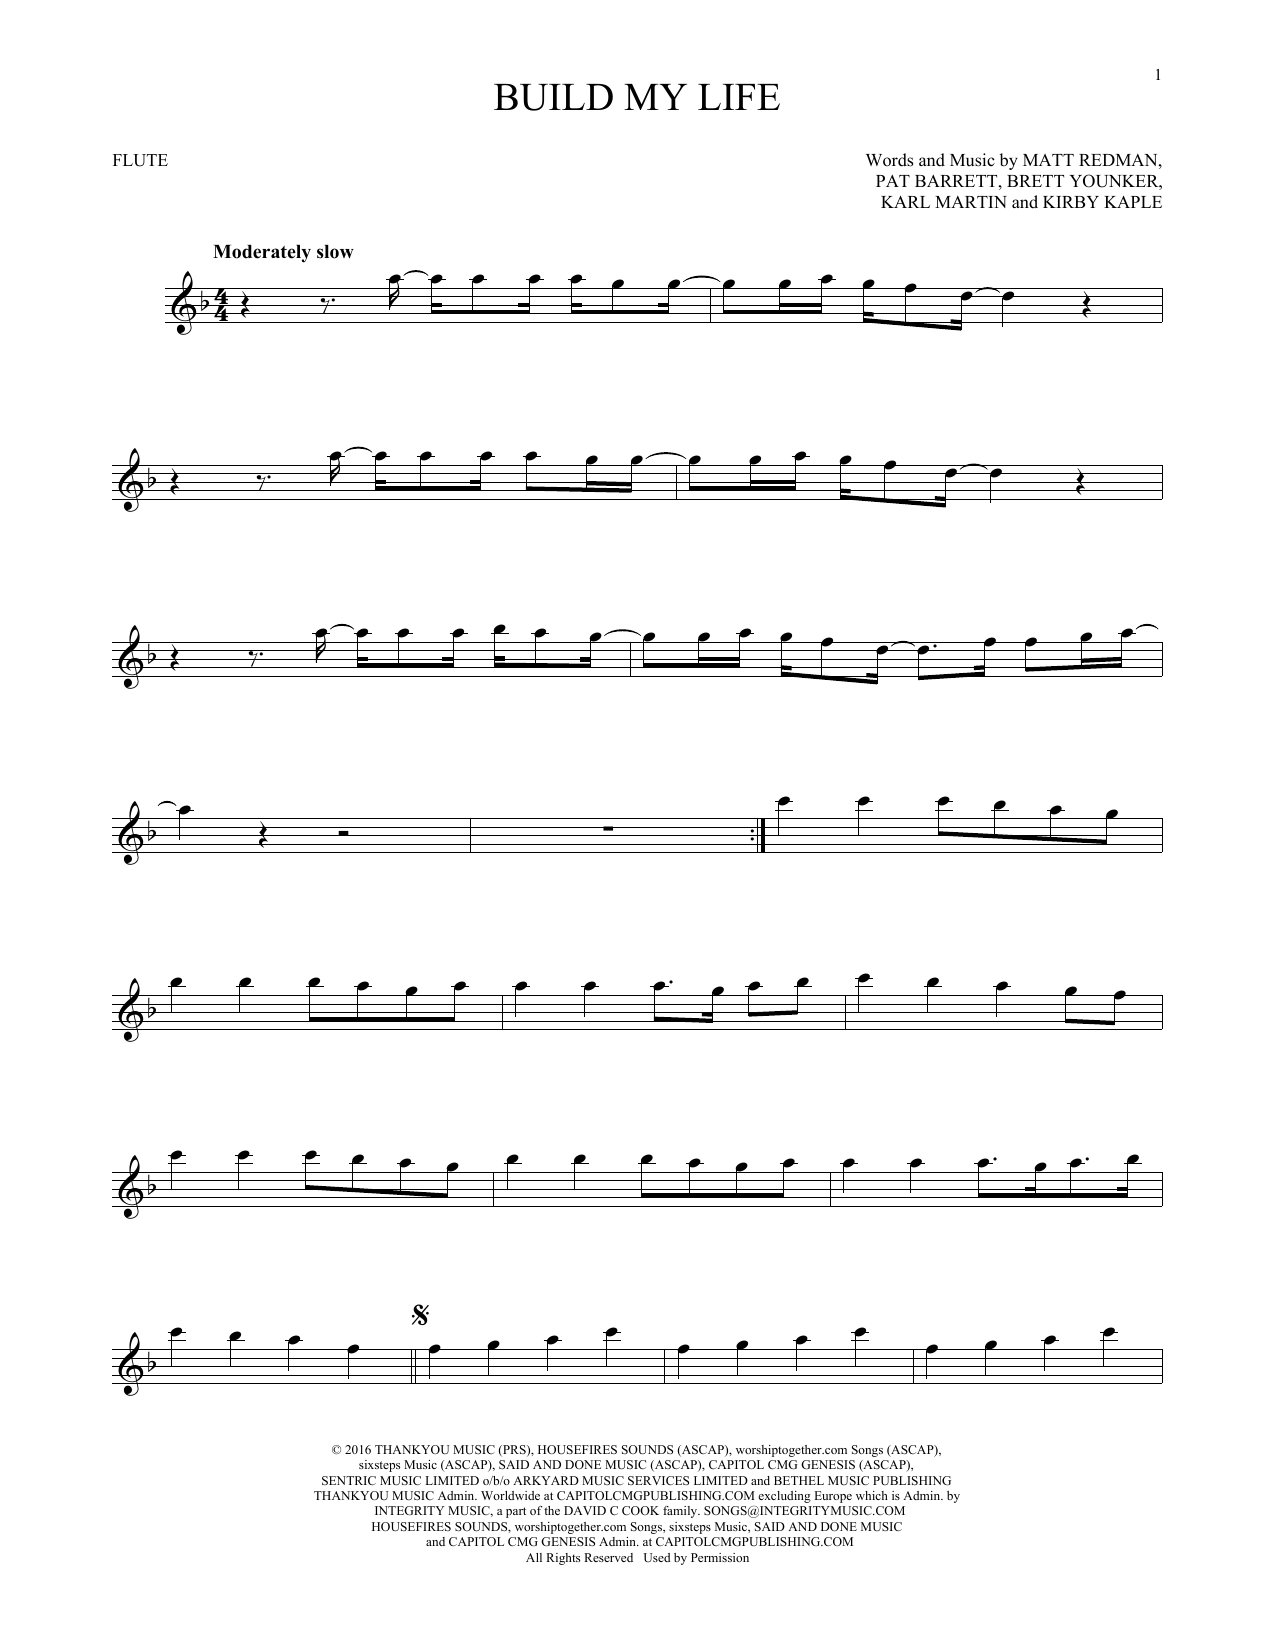 Pat Barrett Build My Life sheet music notes printable PDF score